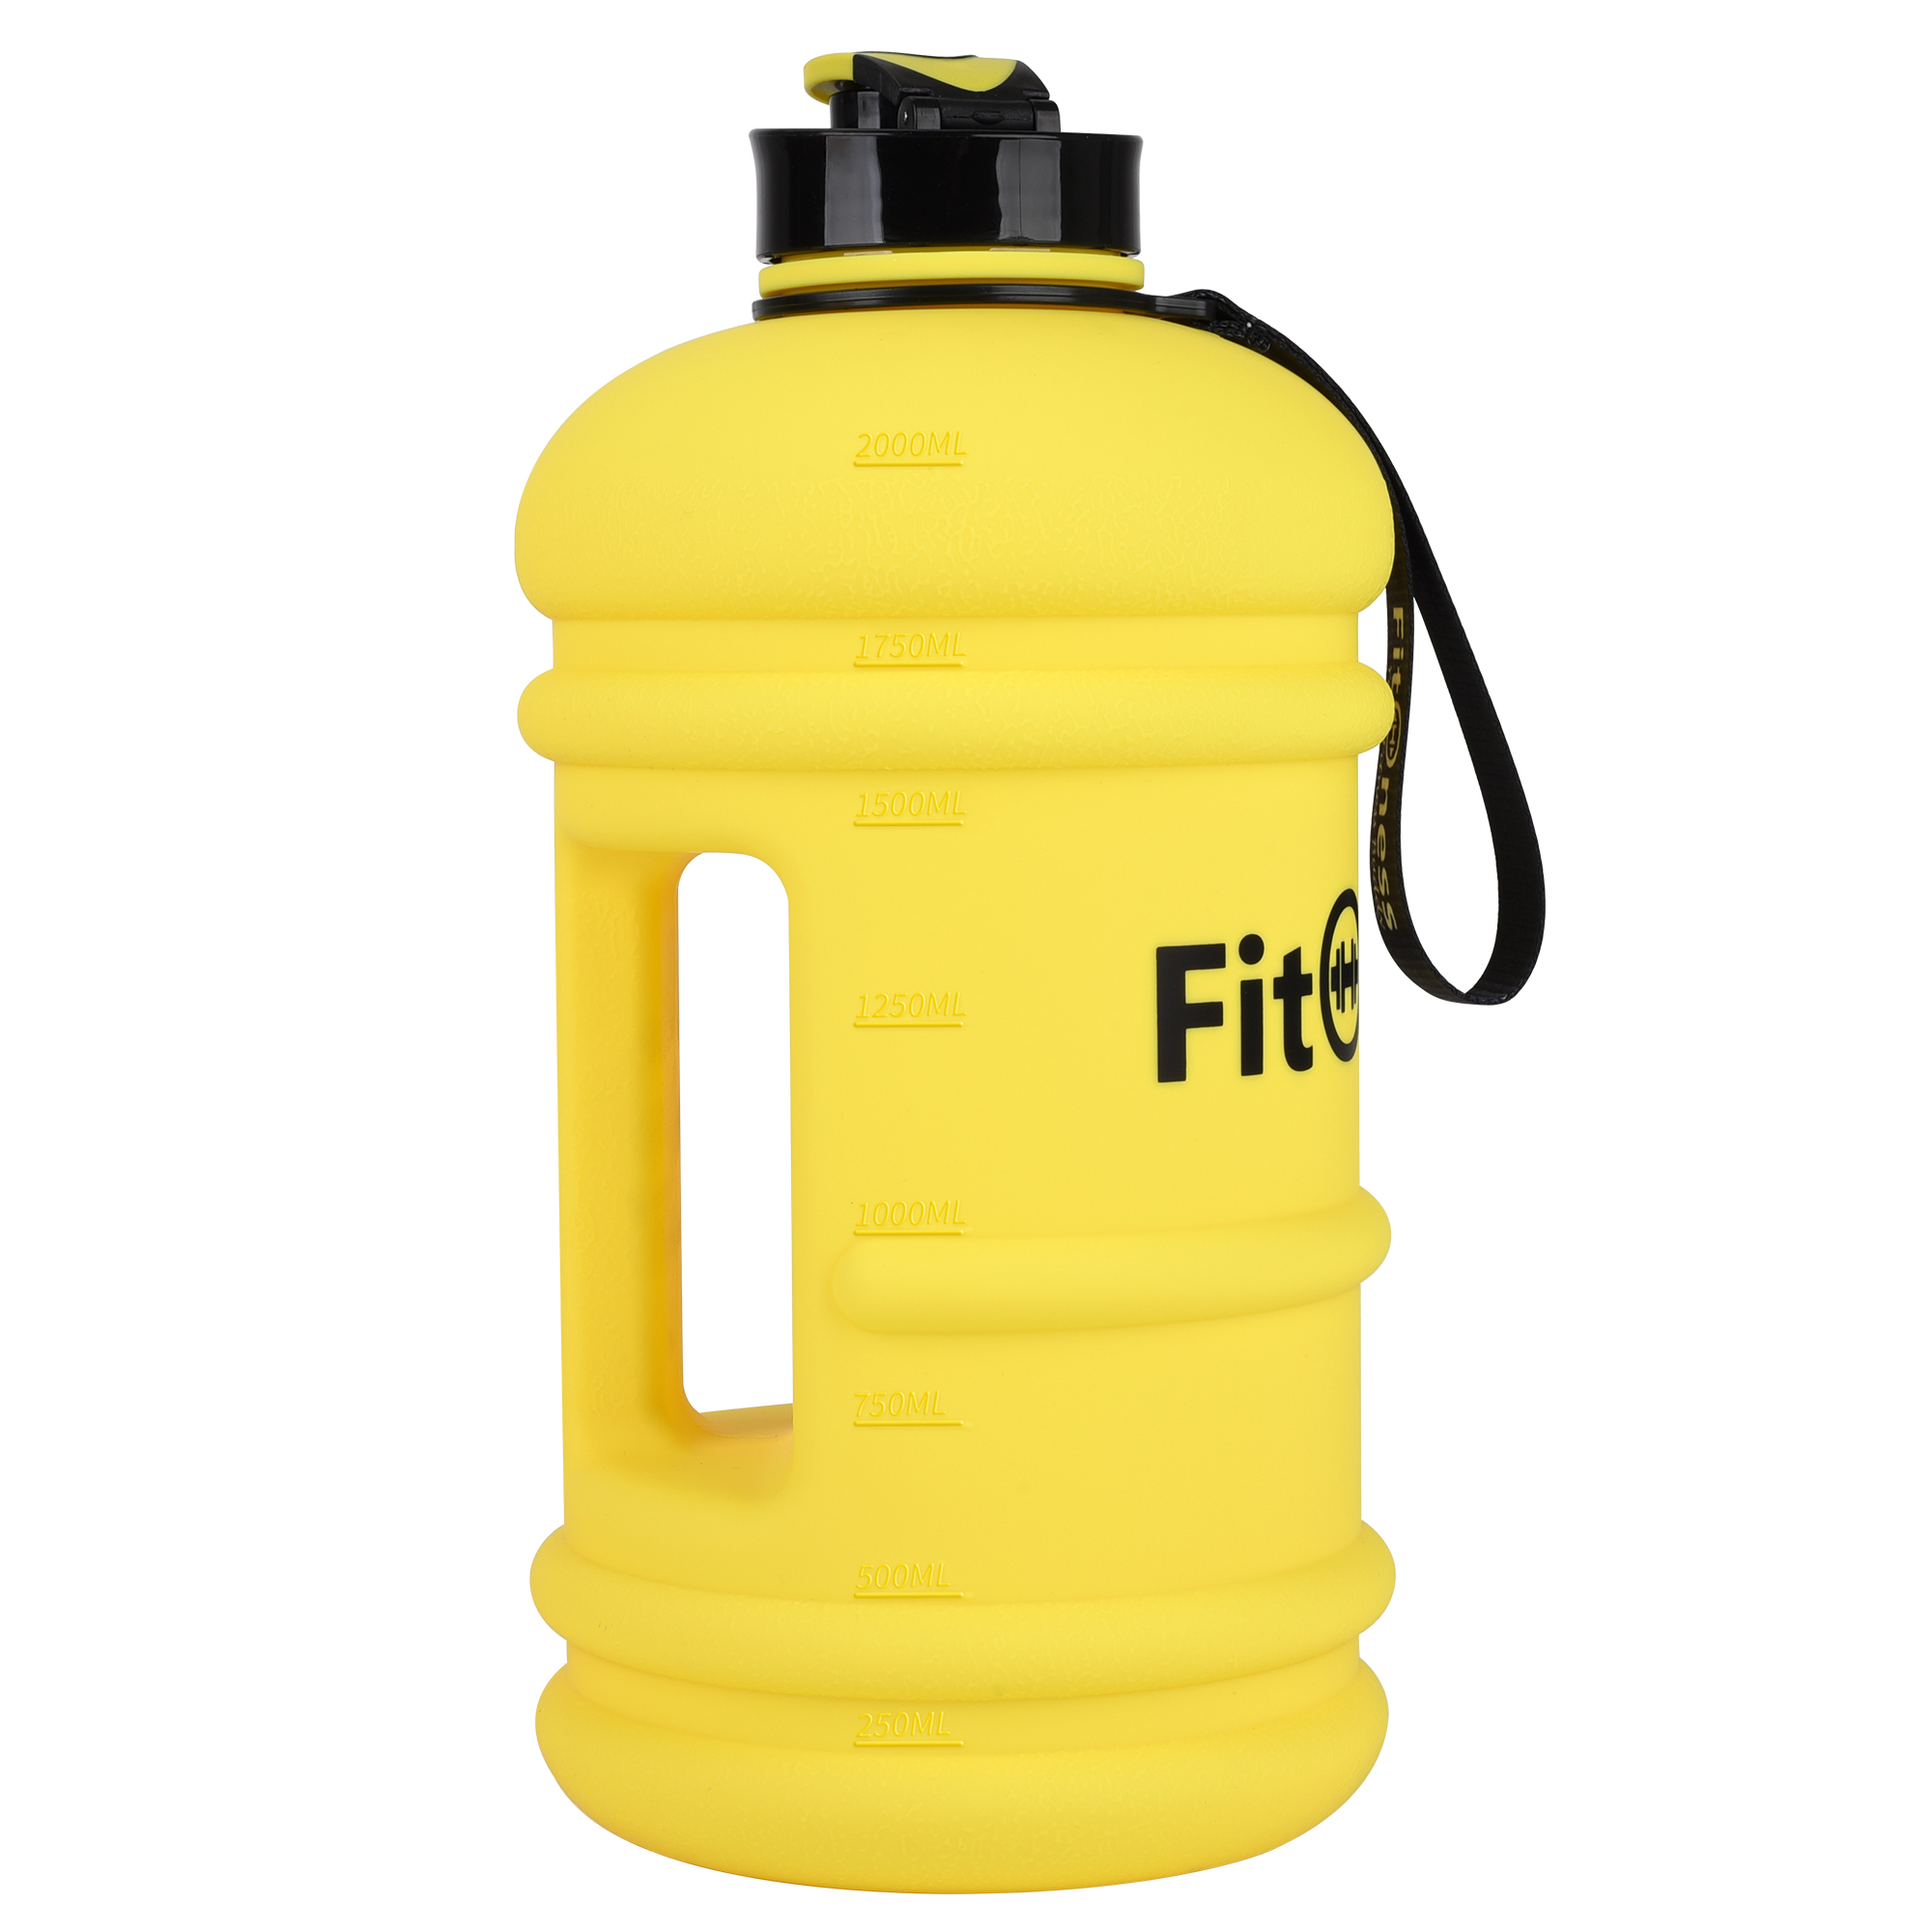 Brand Fitoness Jug Bottle 2.2l / 77oz Yellow Sports